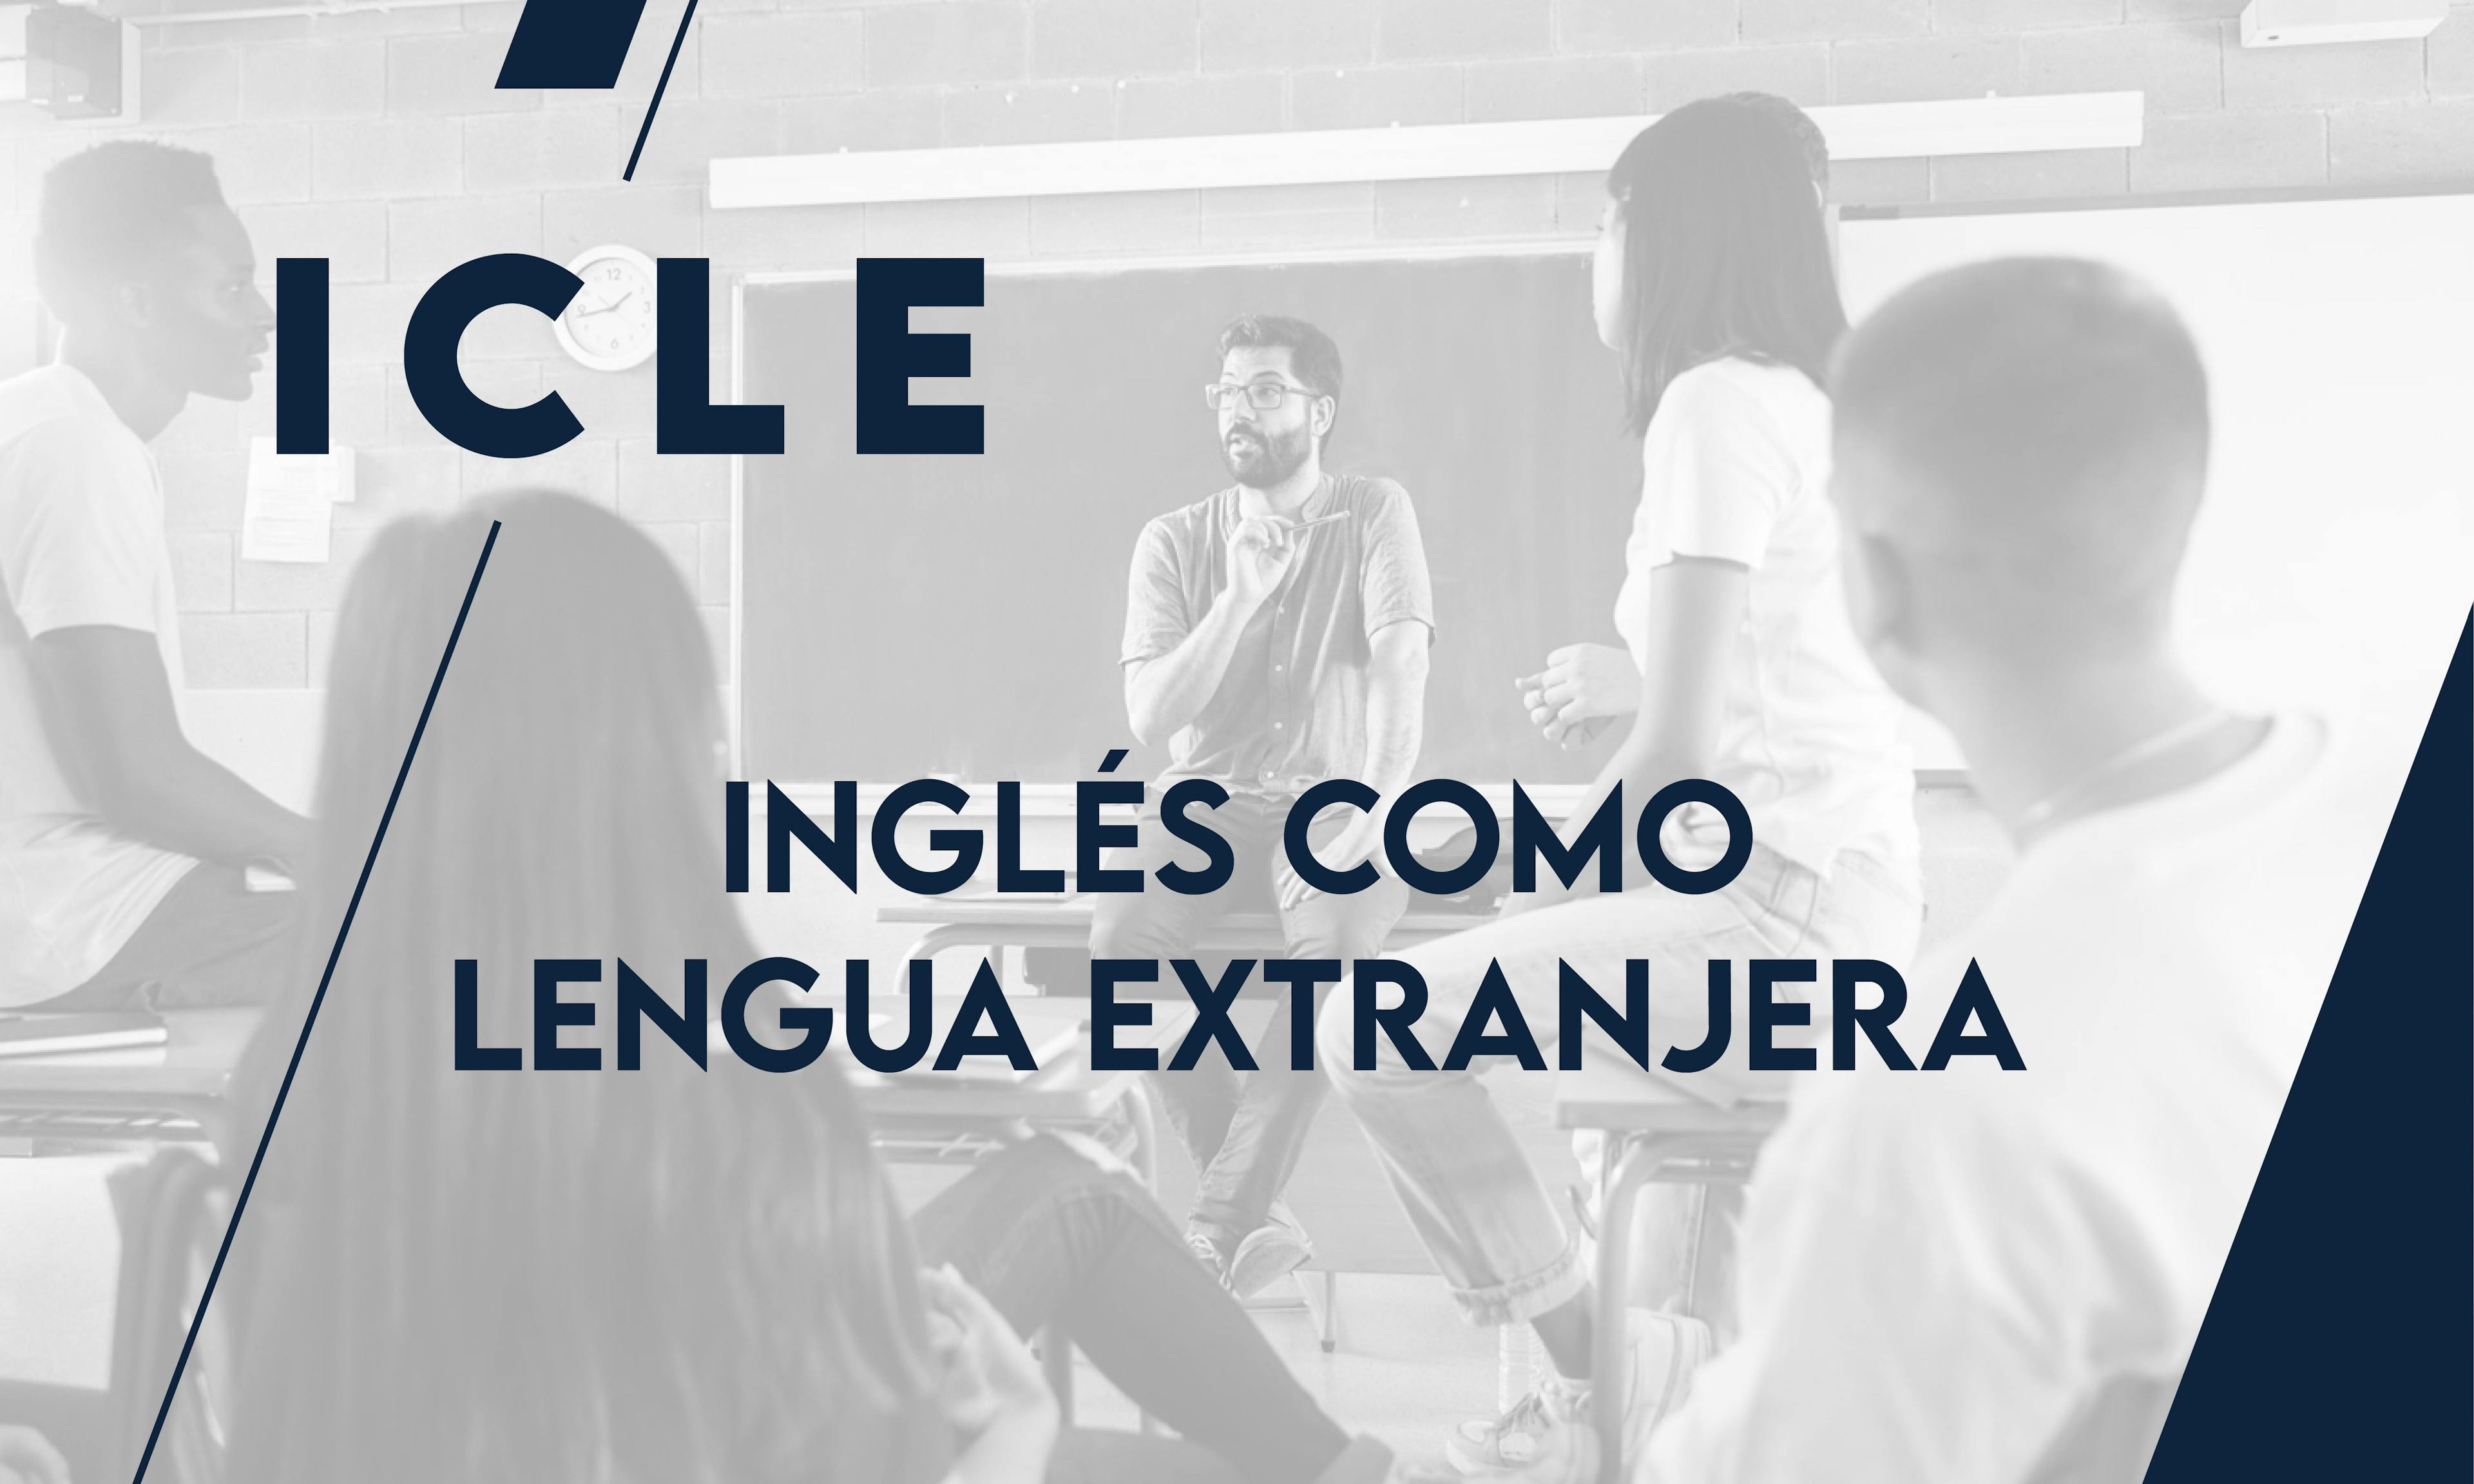 ICLE - Ingles como lengua extranjera